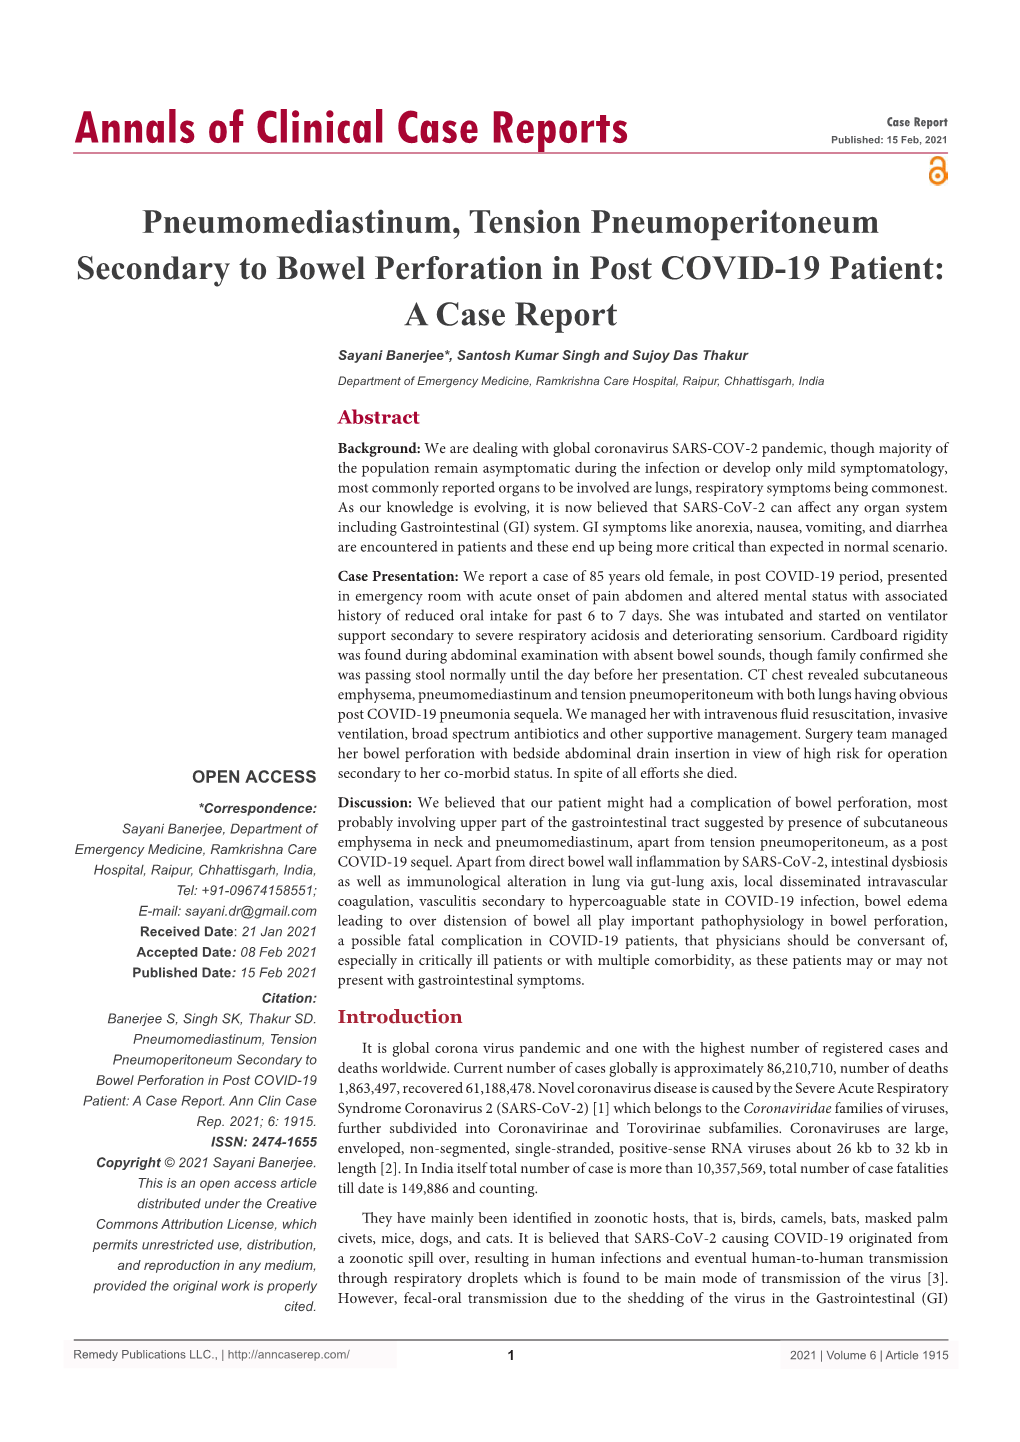 Pneumomediastinum, Tension Pneumoperitoneum Secondary to Bowel Perforation in Post COVID-19 Patient: a Case Report